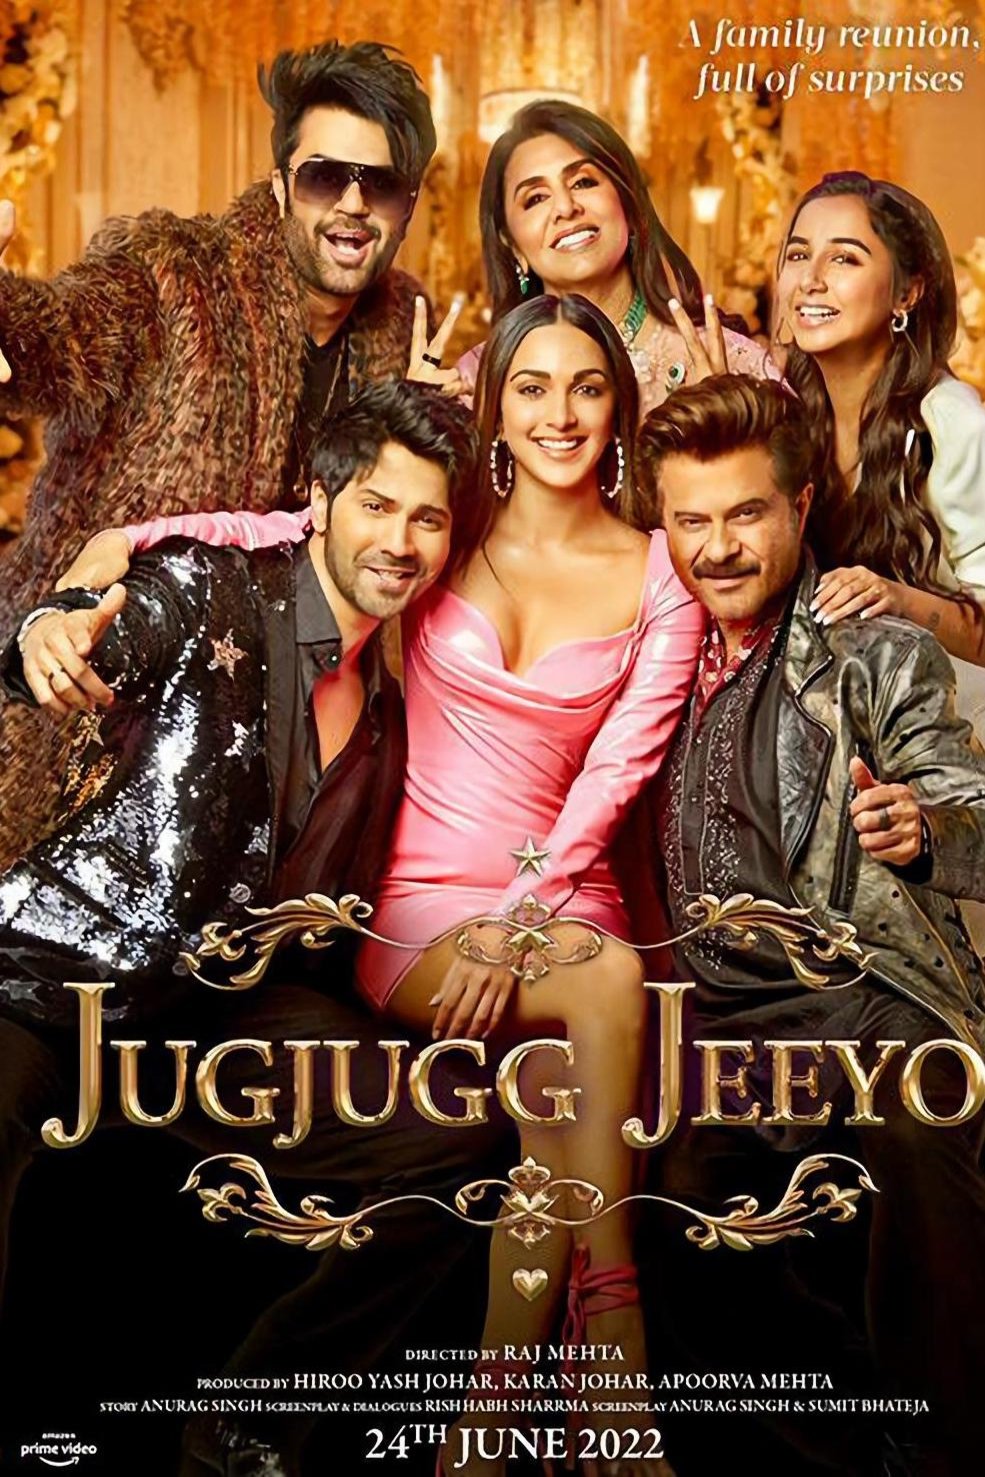 Hindi poster of the movie Jugjugg Jeeyo